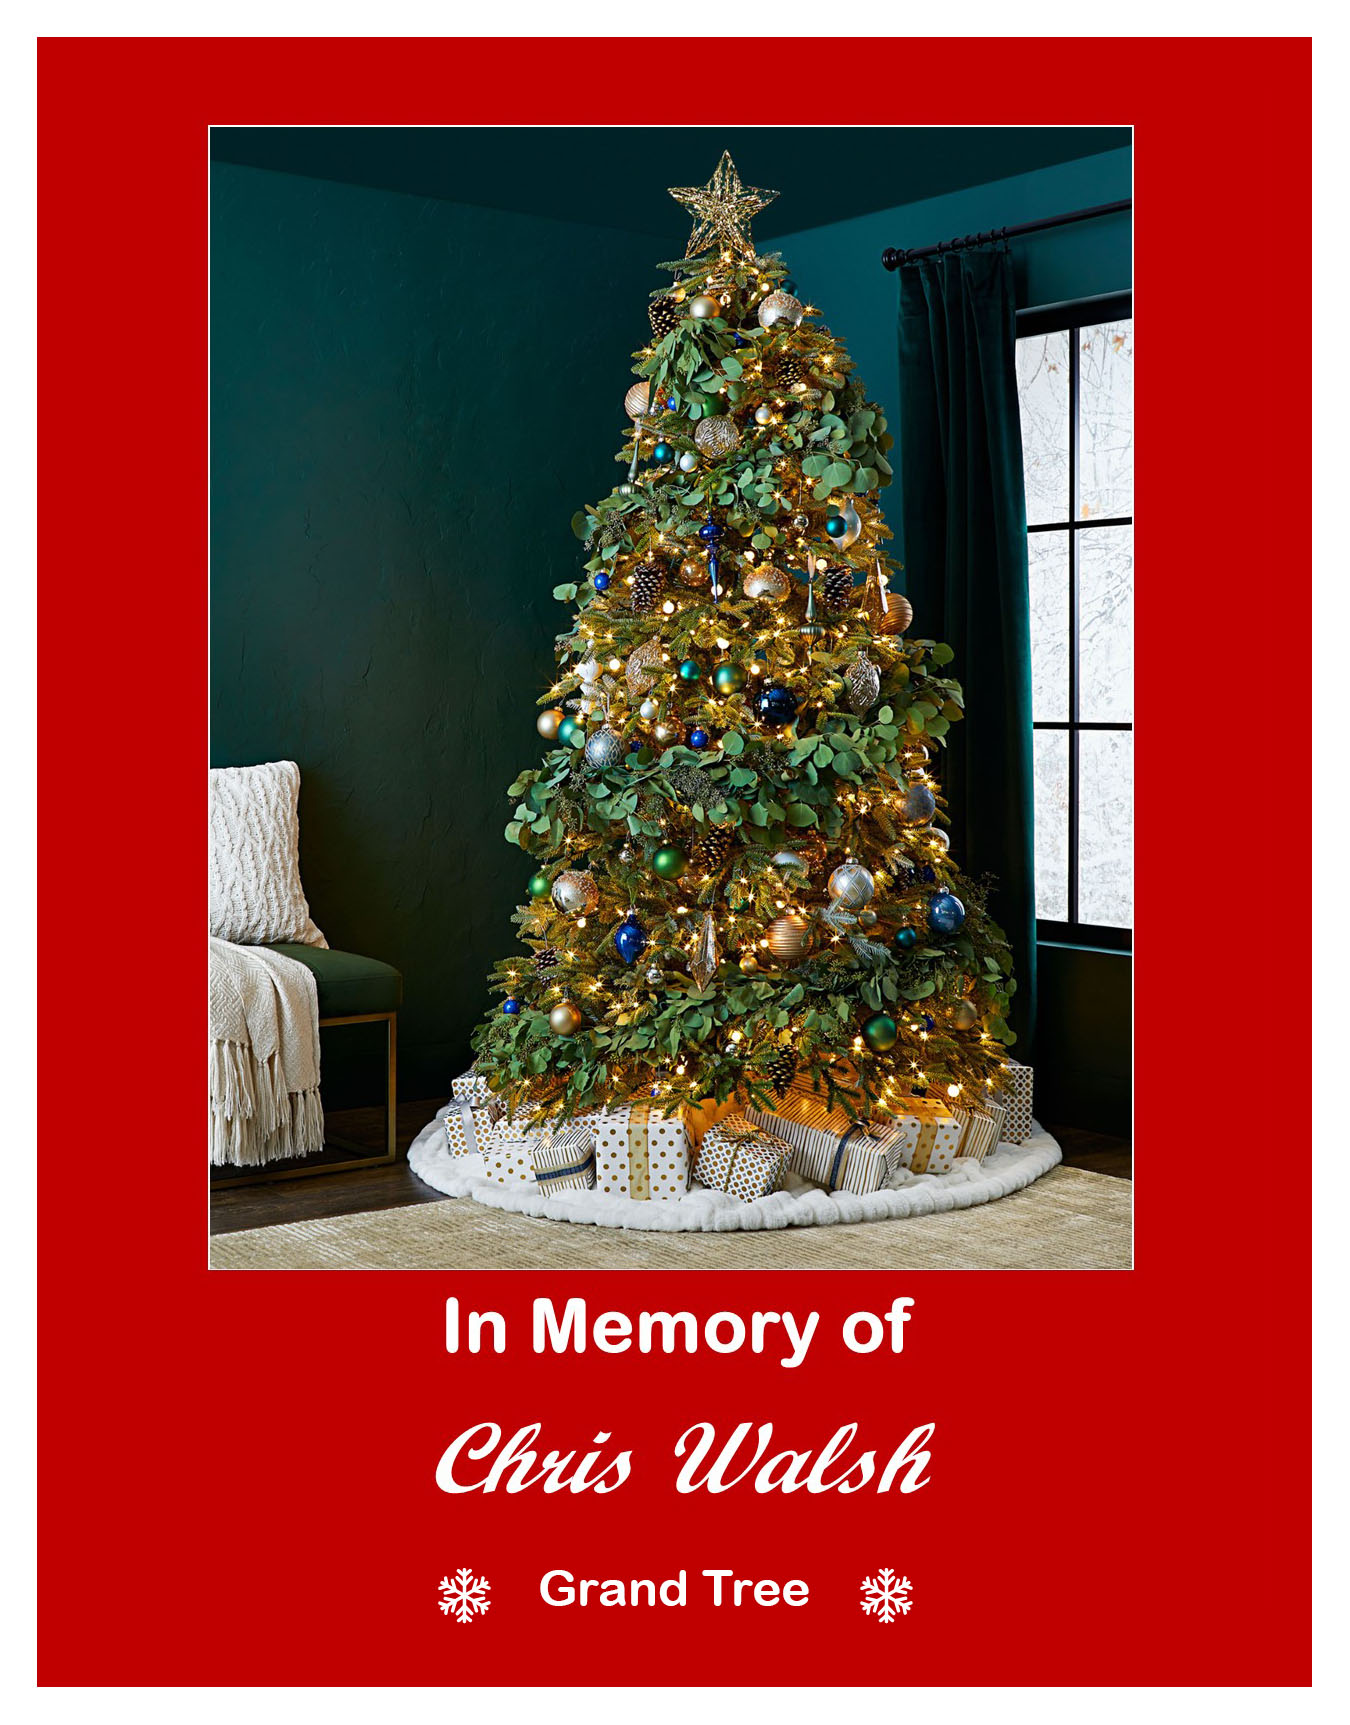 In memory of Chris Walsh